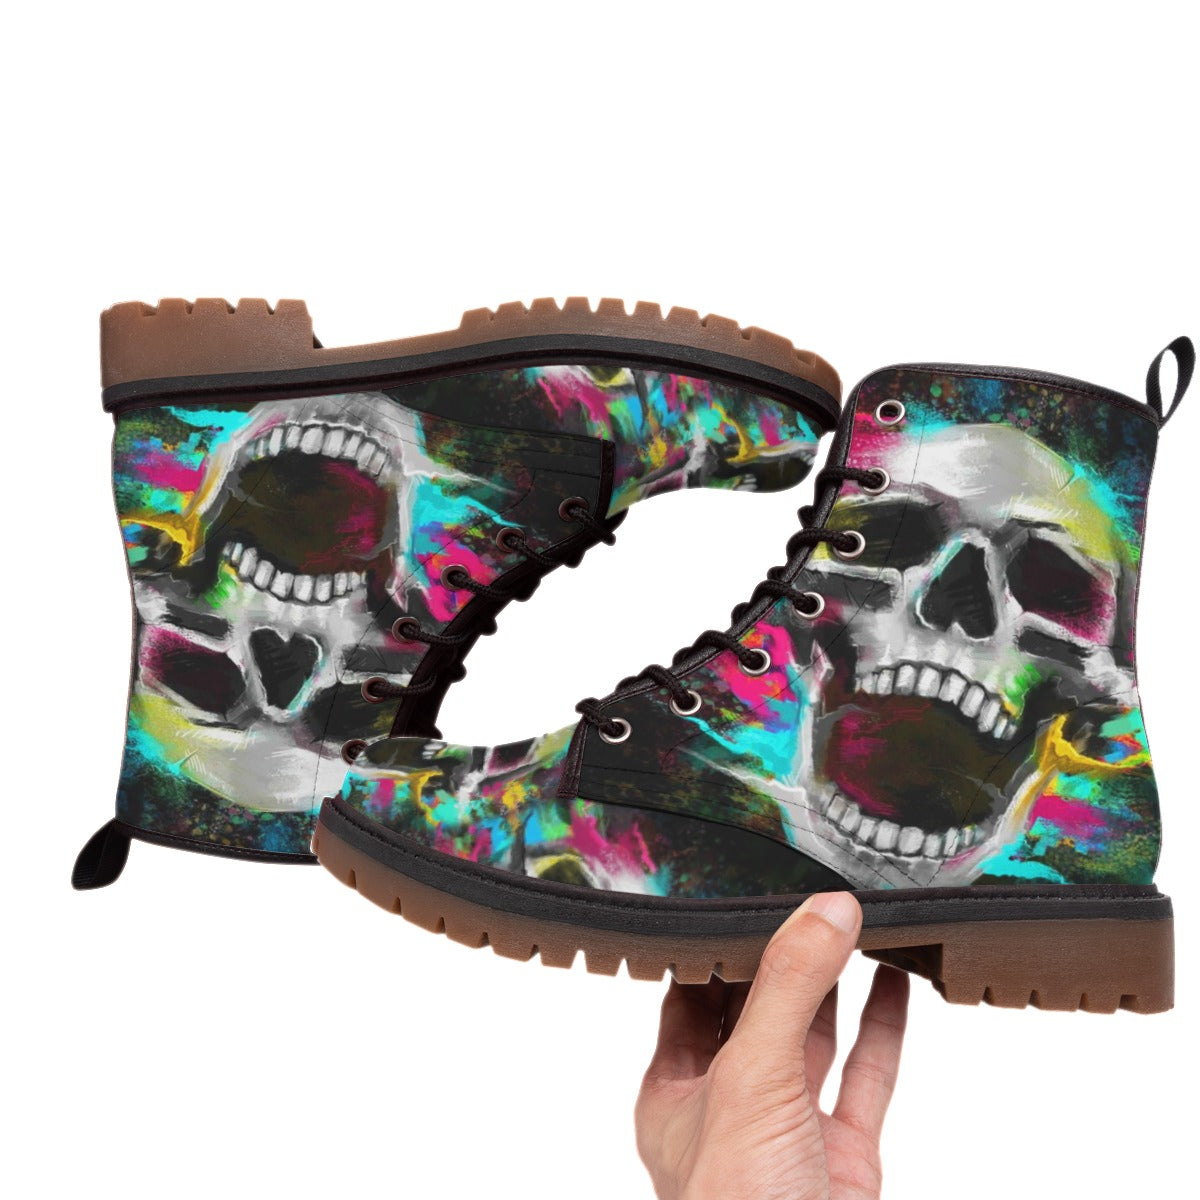 Gothic skull grim reaper shoes Boots, Halloween horror skeleton boots for women men